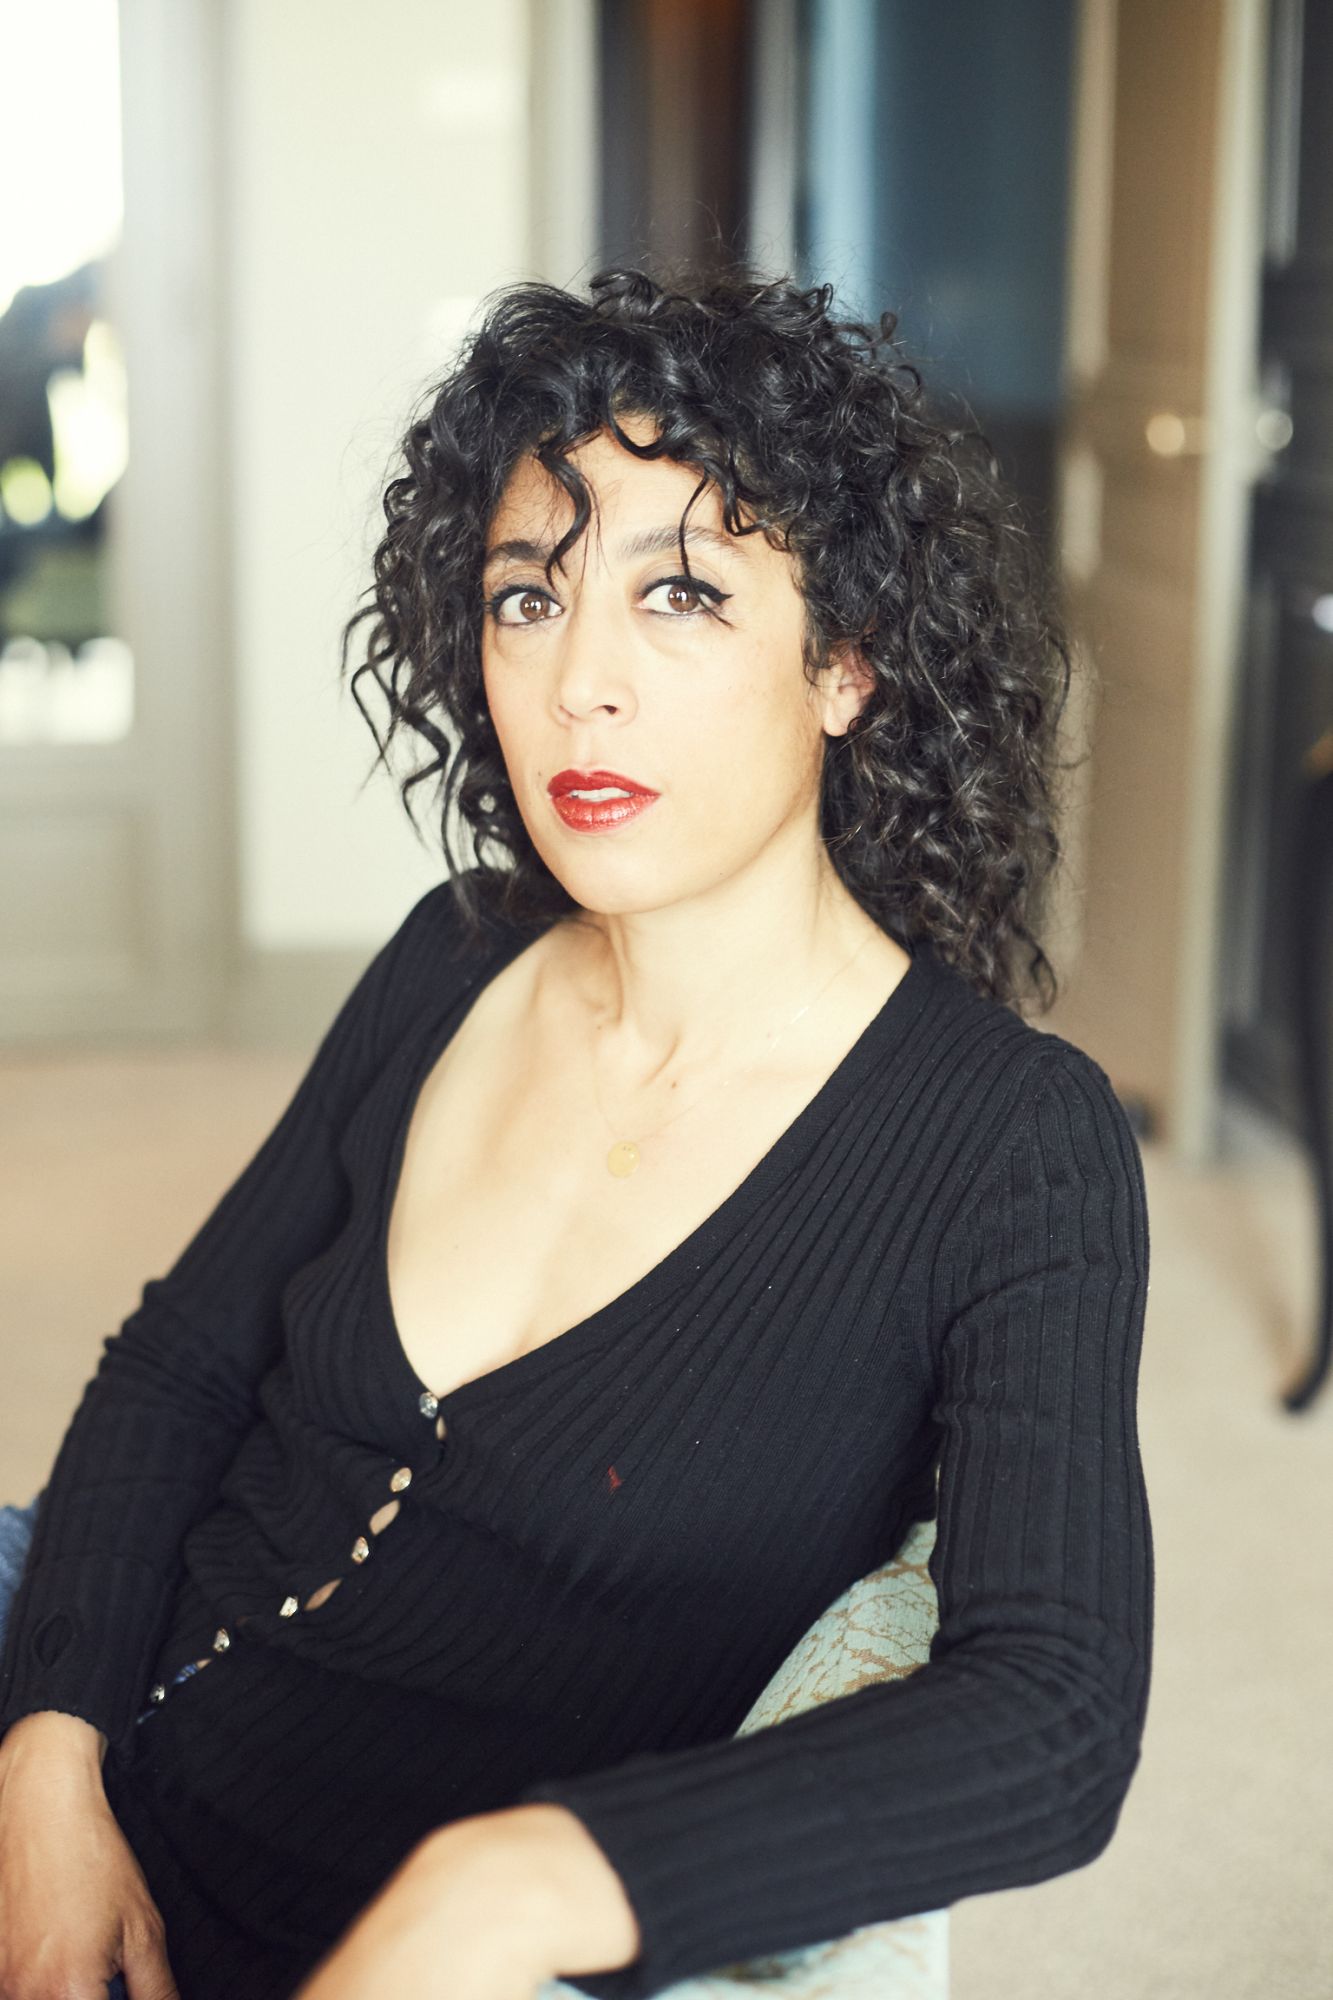 Naidra Ayadi, membre du Grand Jury
Maquillage : Dr. Hauschka
Coiffure : Franck Provost